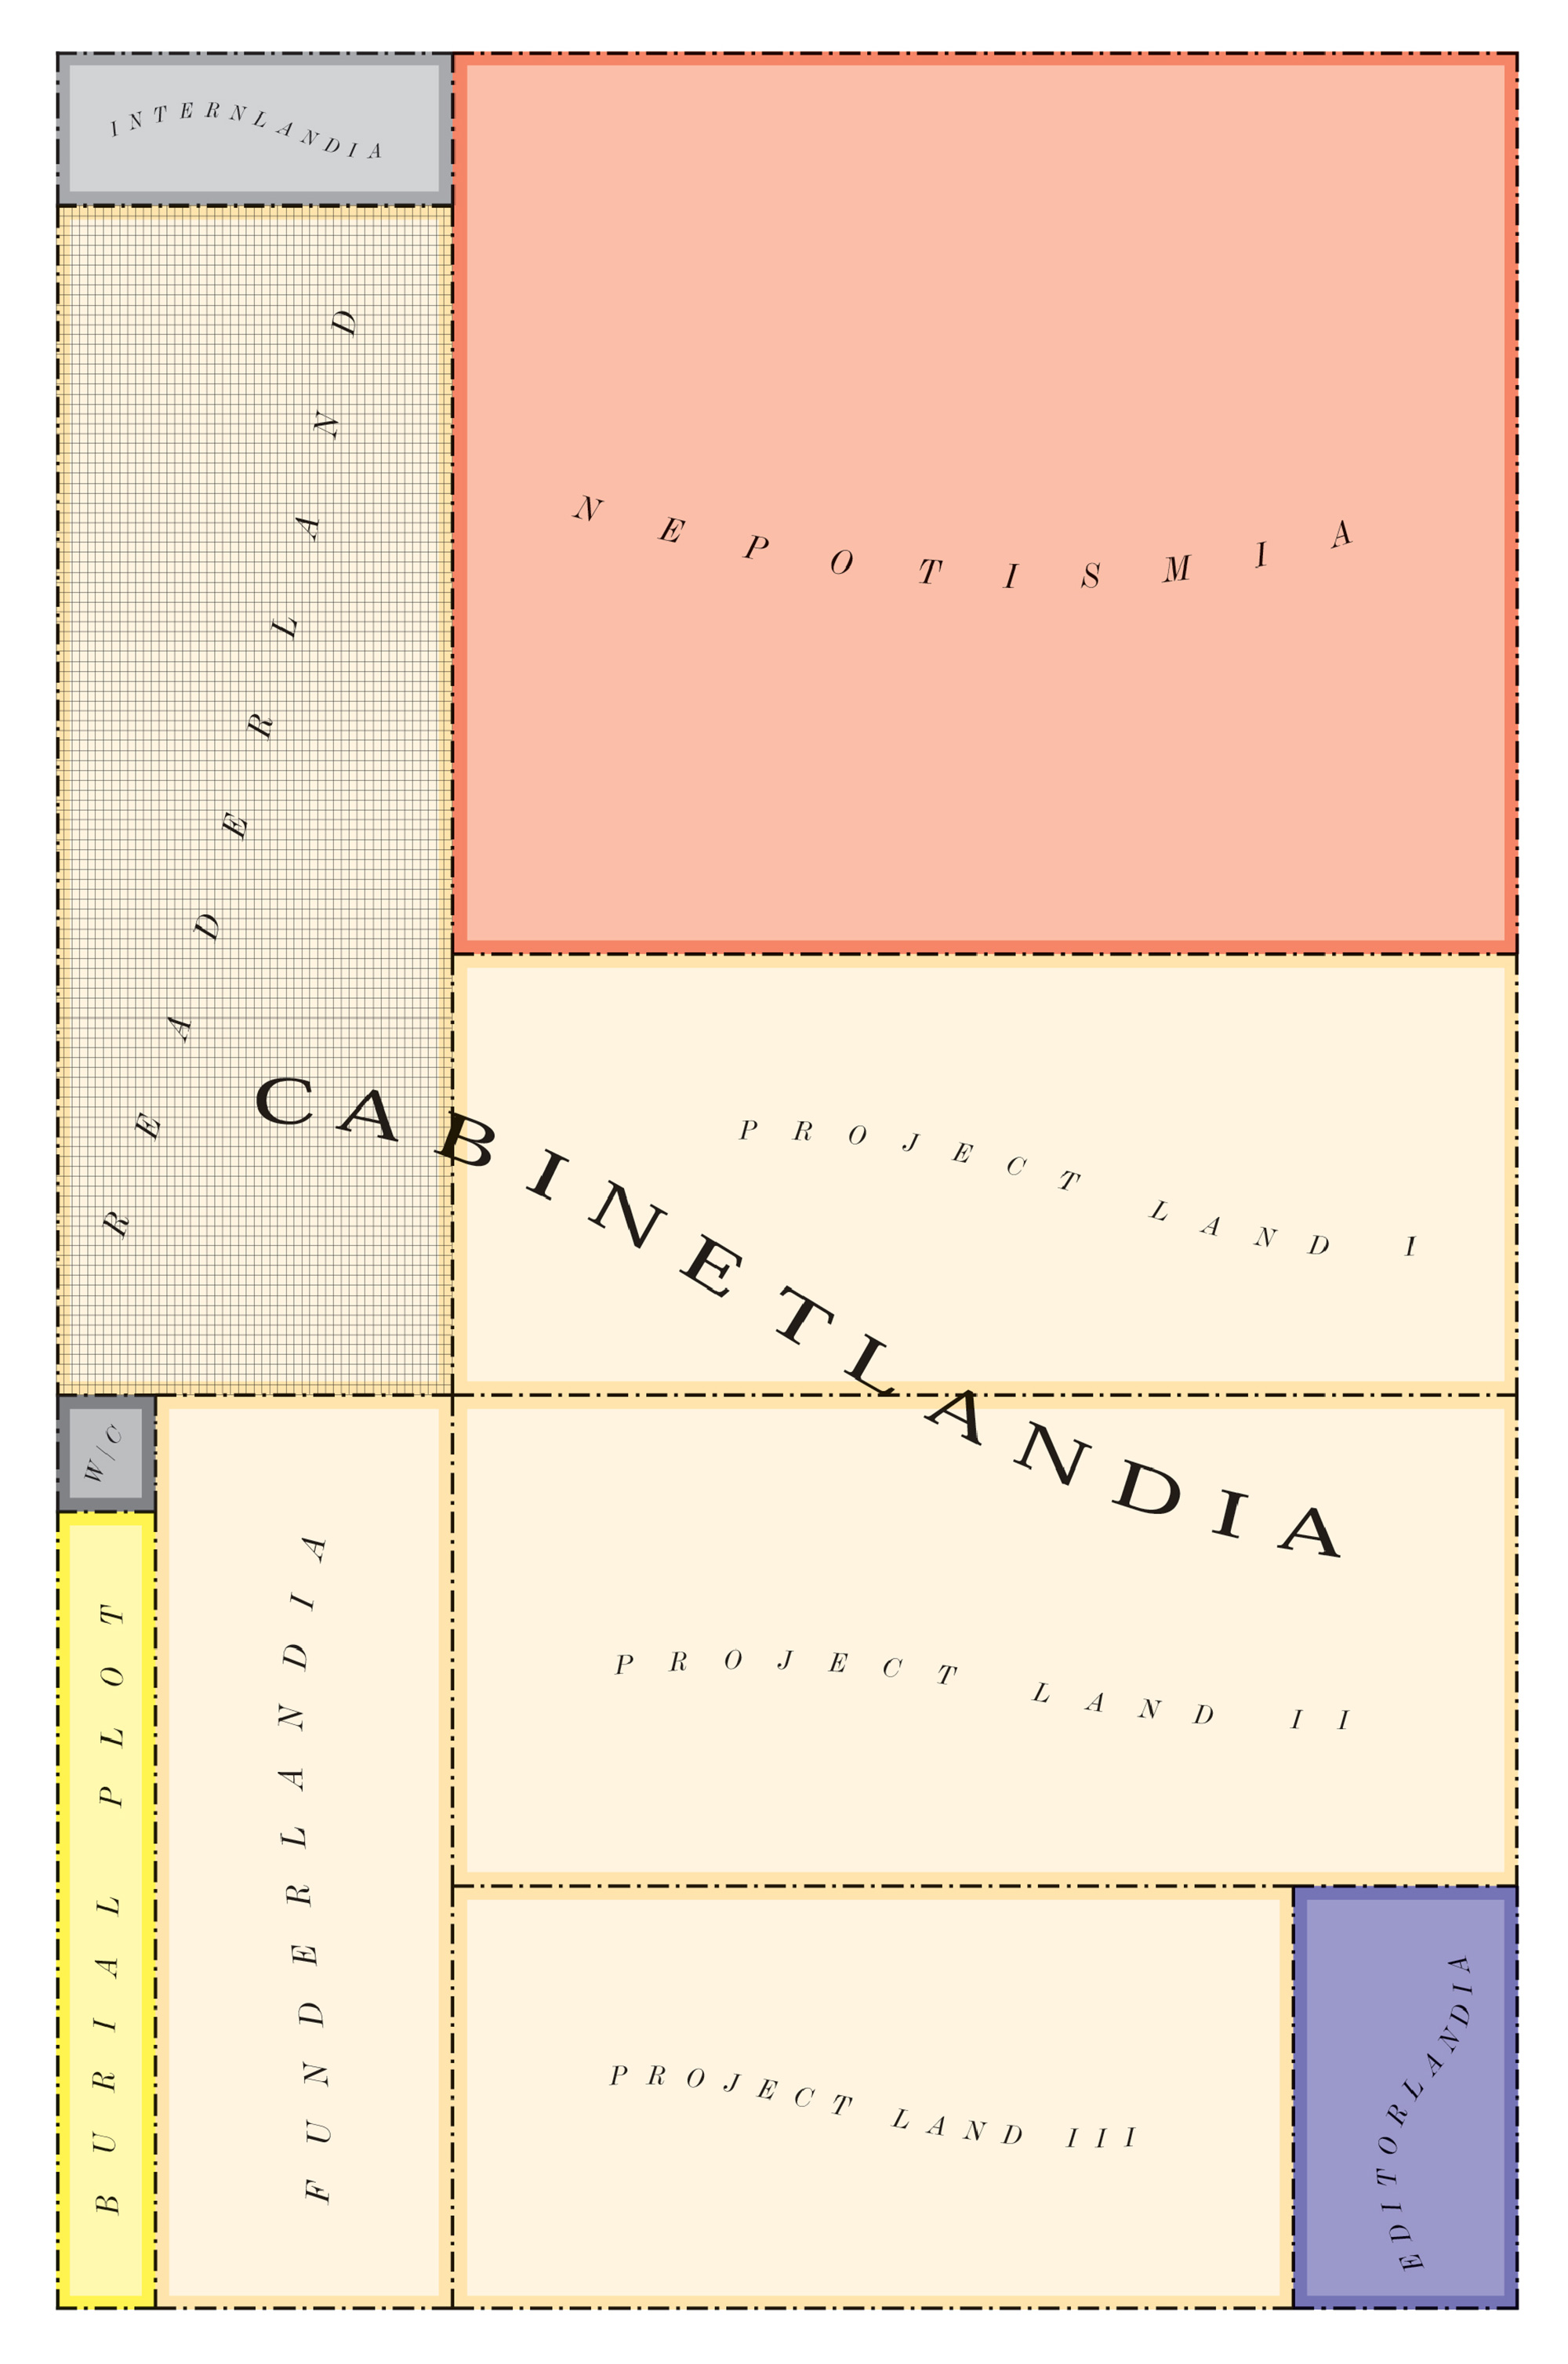 A map of Cabinetlandia.